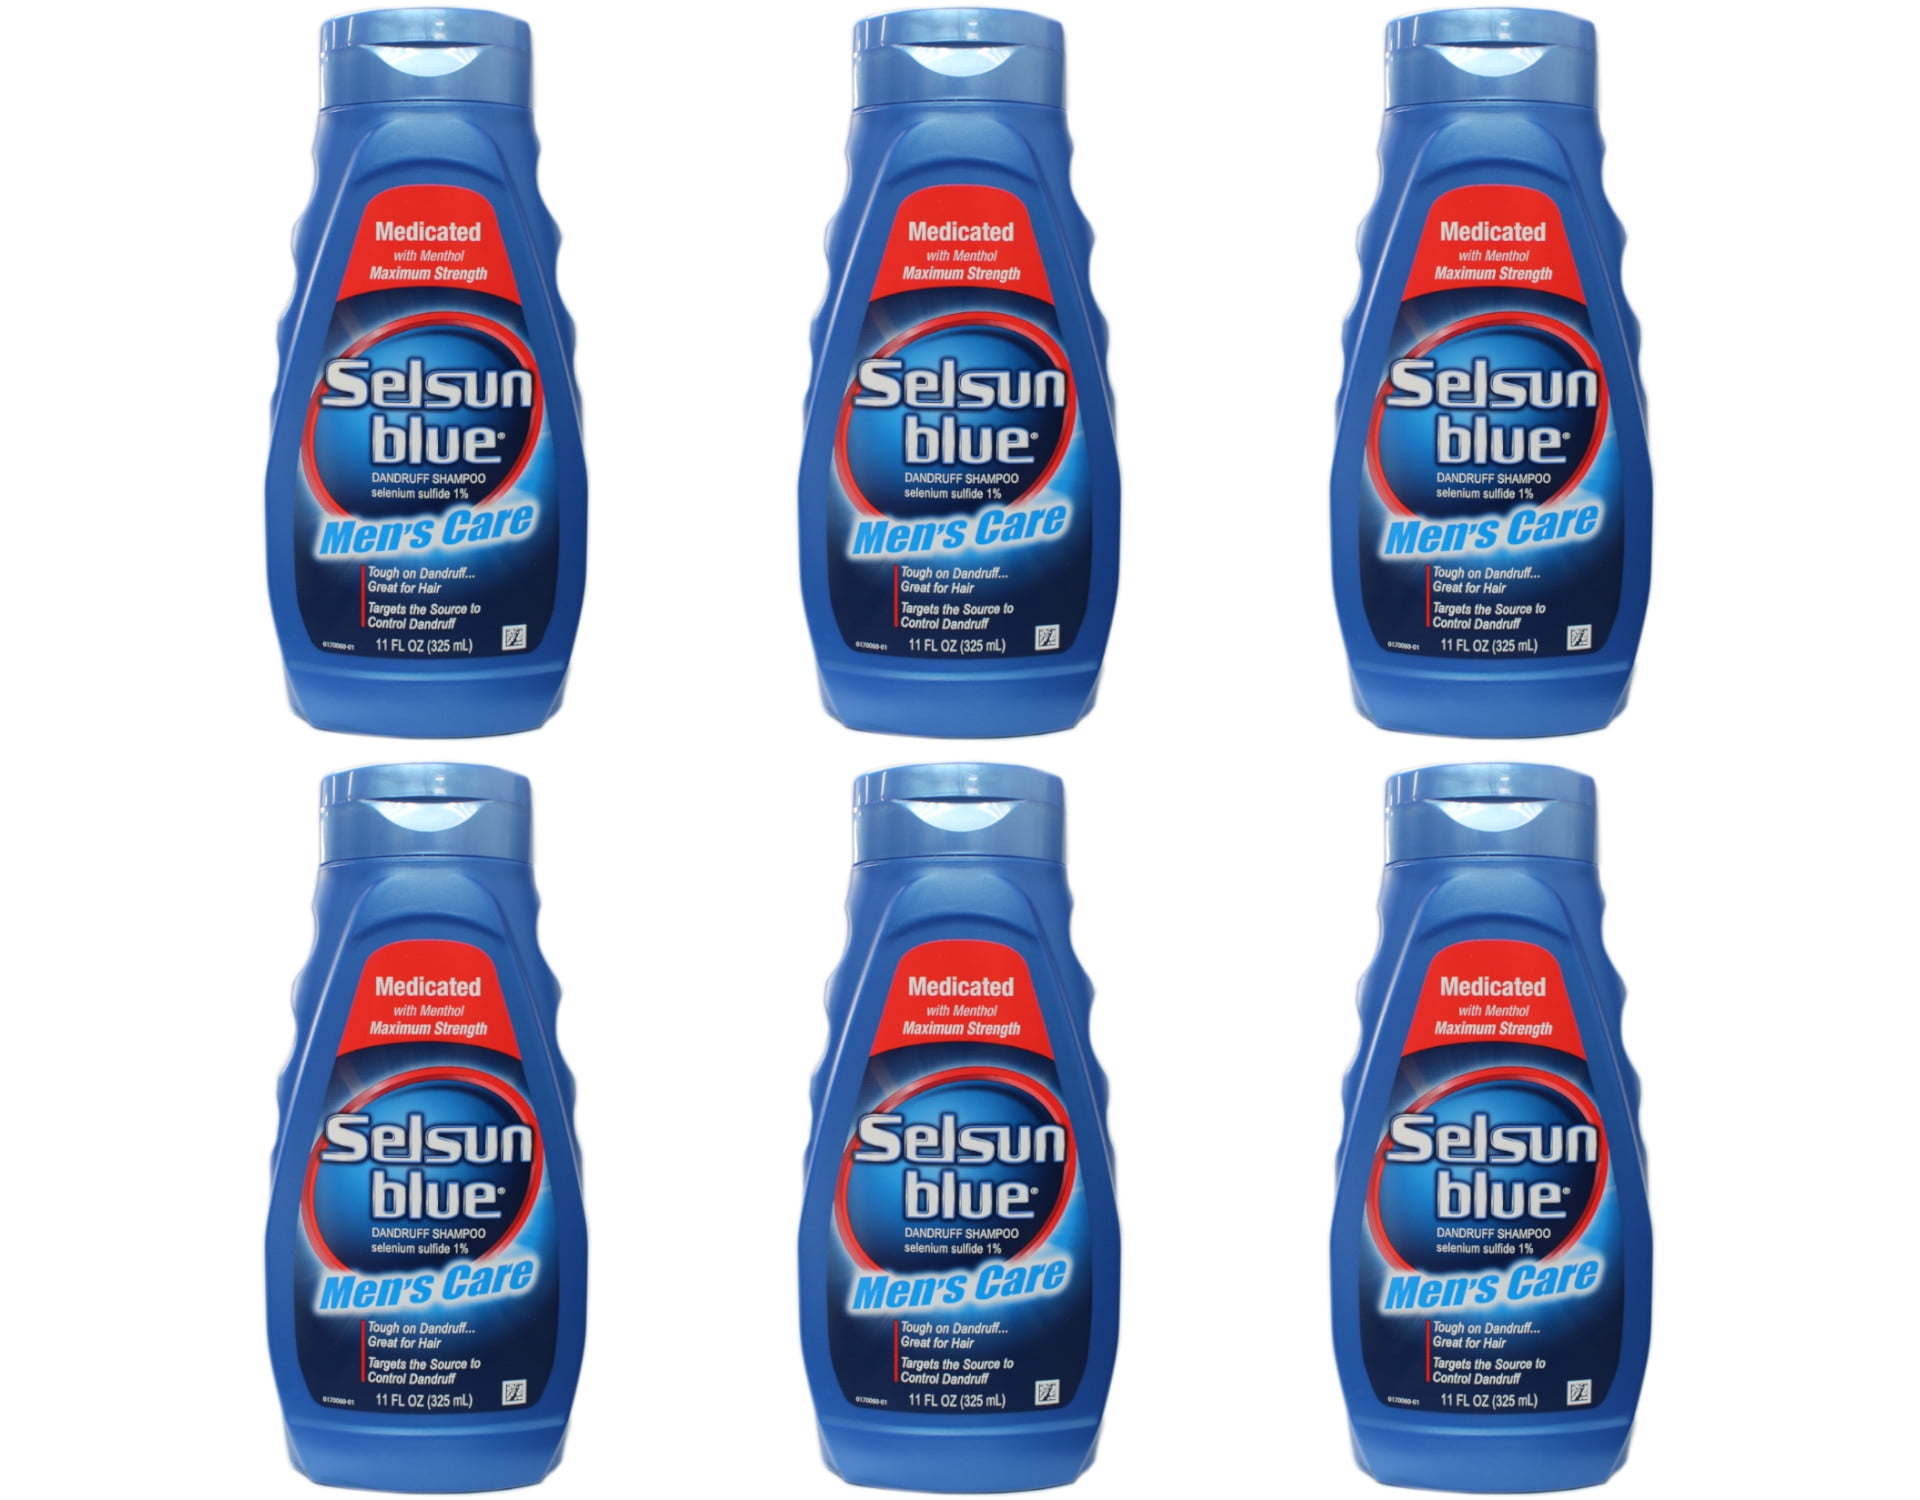 1. Selsun Blue Medicated Maximum Strength Dandruff Shampoo - wide 7